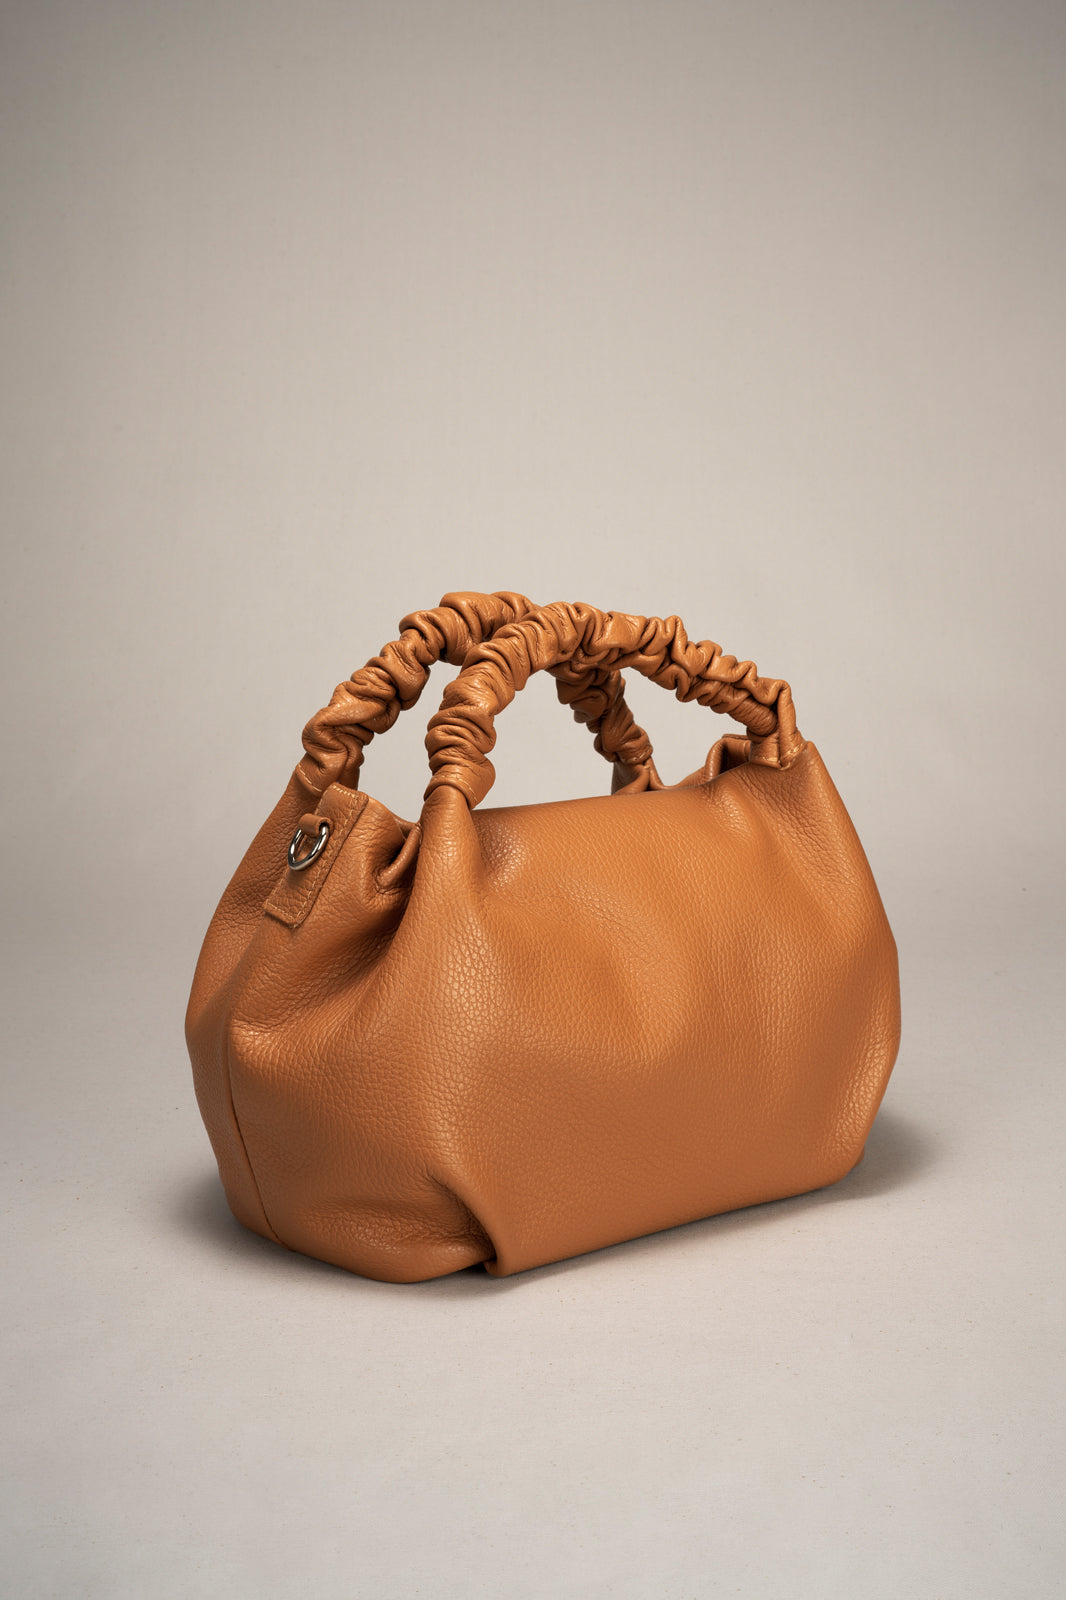 Beautiful cognac color Italian made leather handbag